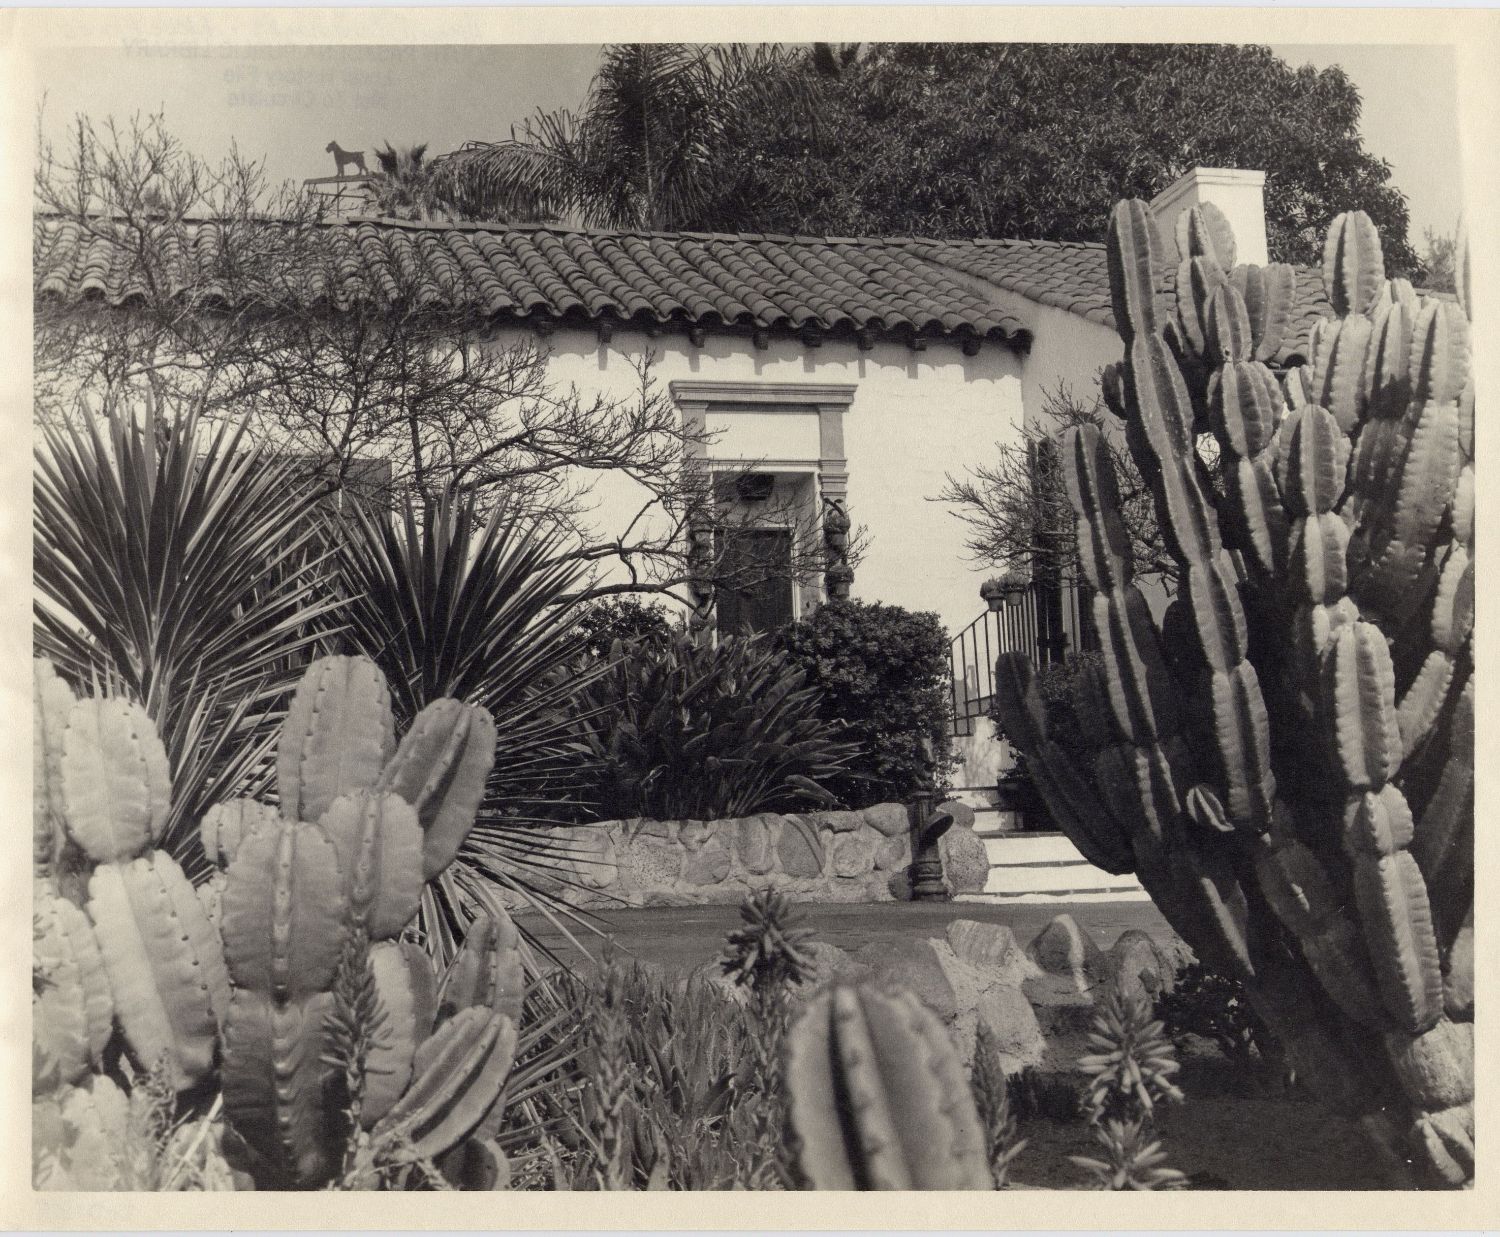 PHOTO: South Pasadena Preservation Foundation | The El Adobe Flores house in South Pasadena